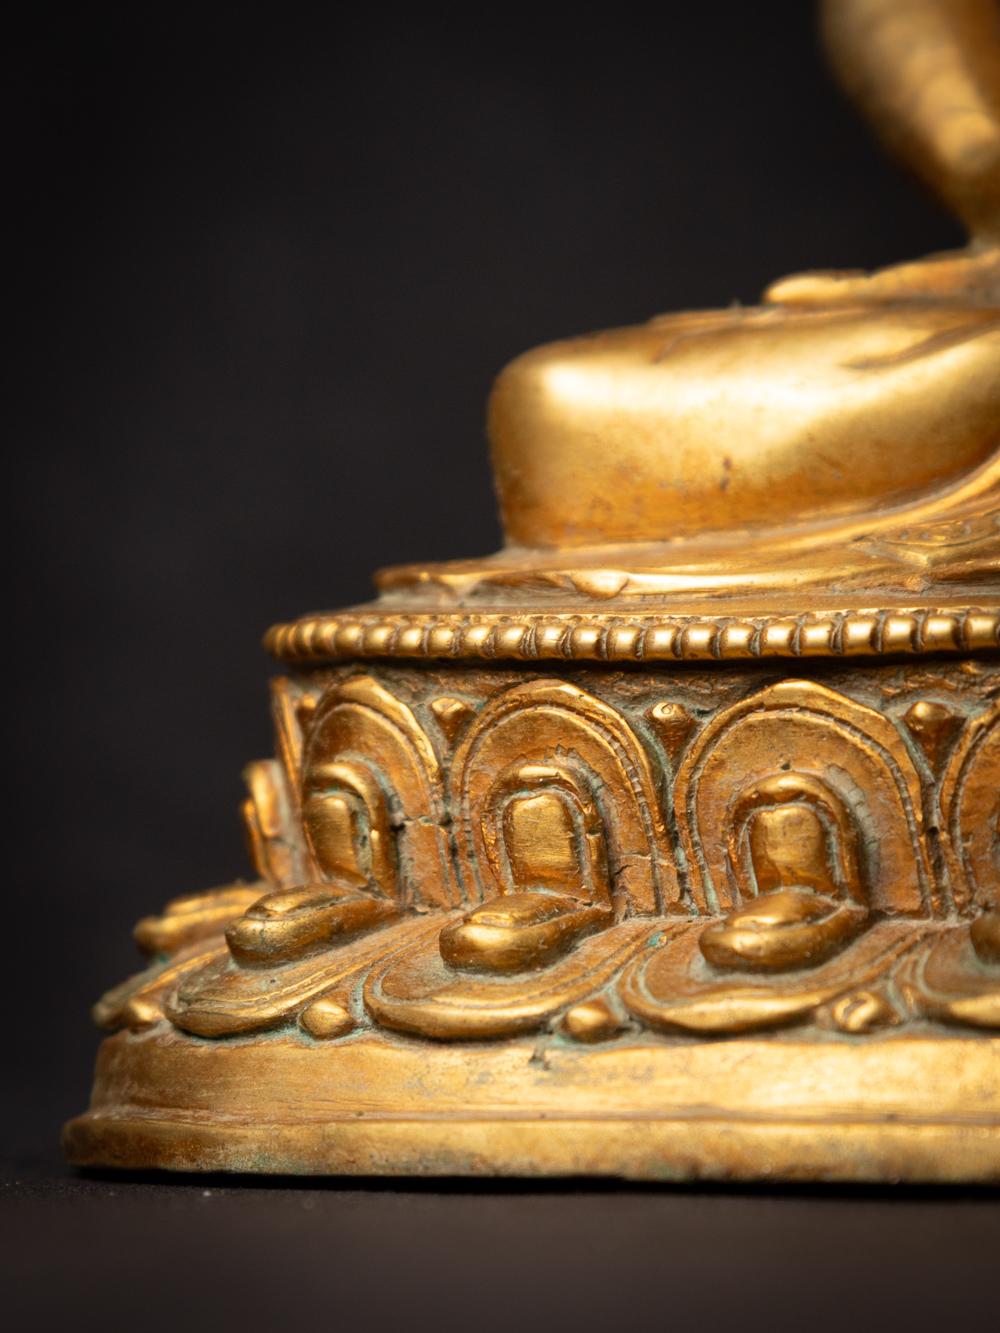 Middle 20th century Old bronze Nepali Buddha statue - OriginalBuddhas 12